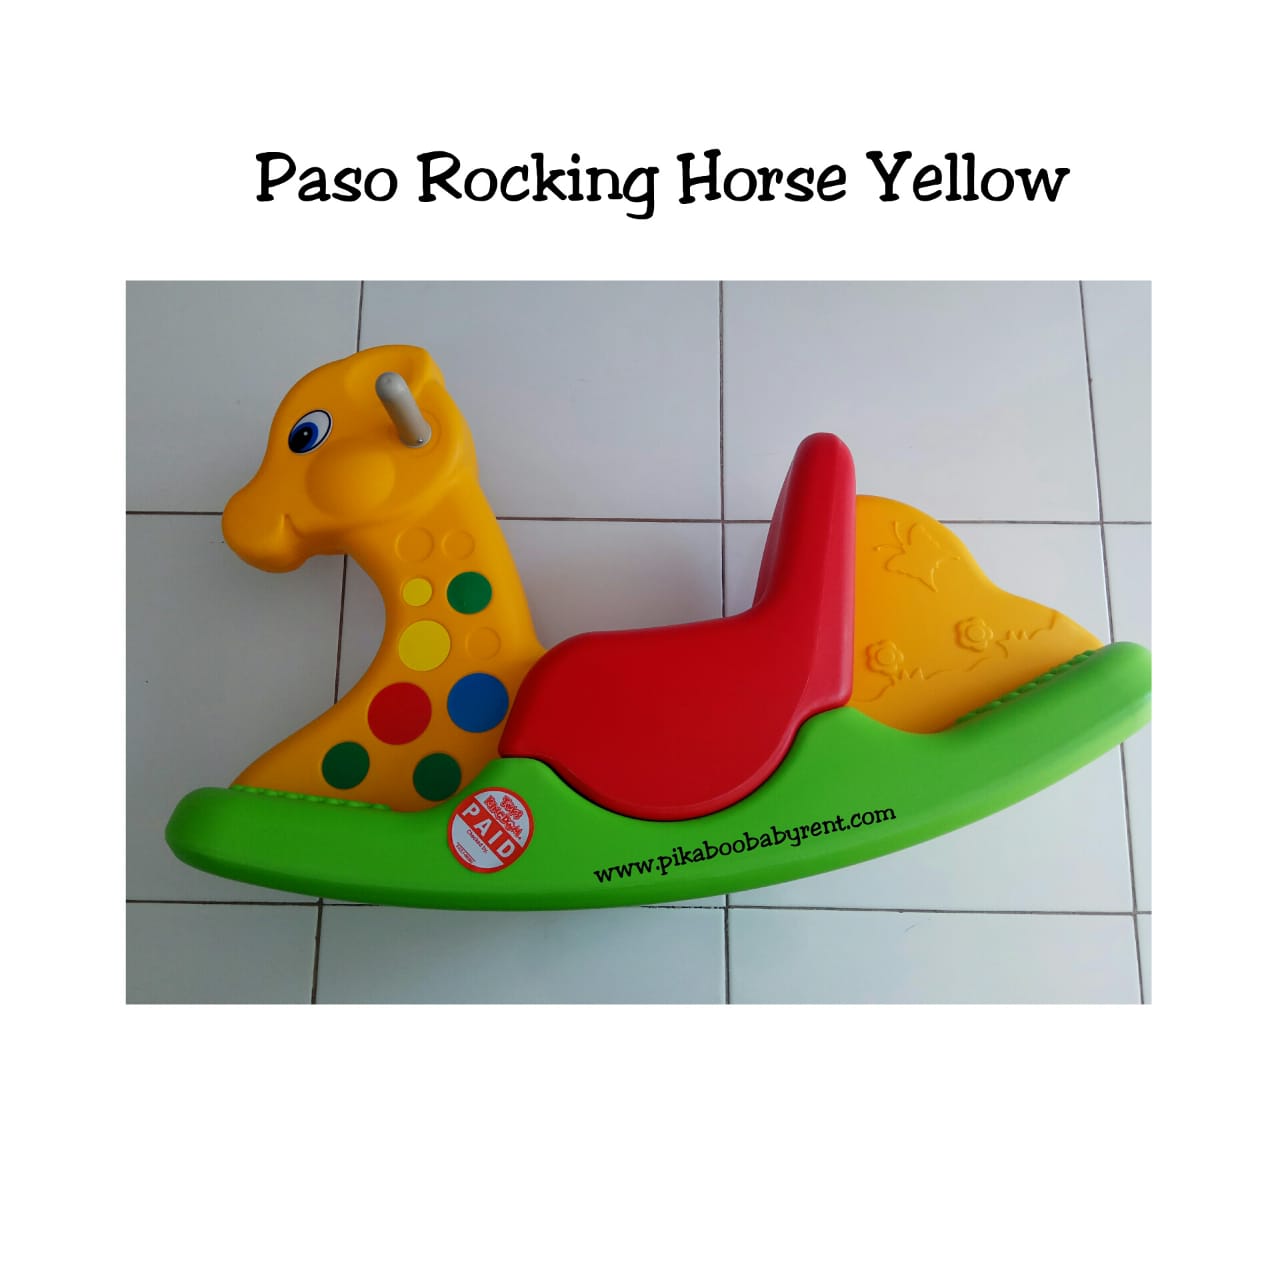 PASO ROCKING HORSE YELLOW